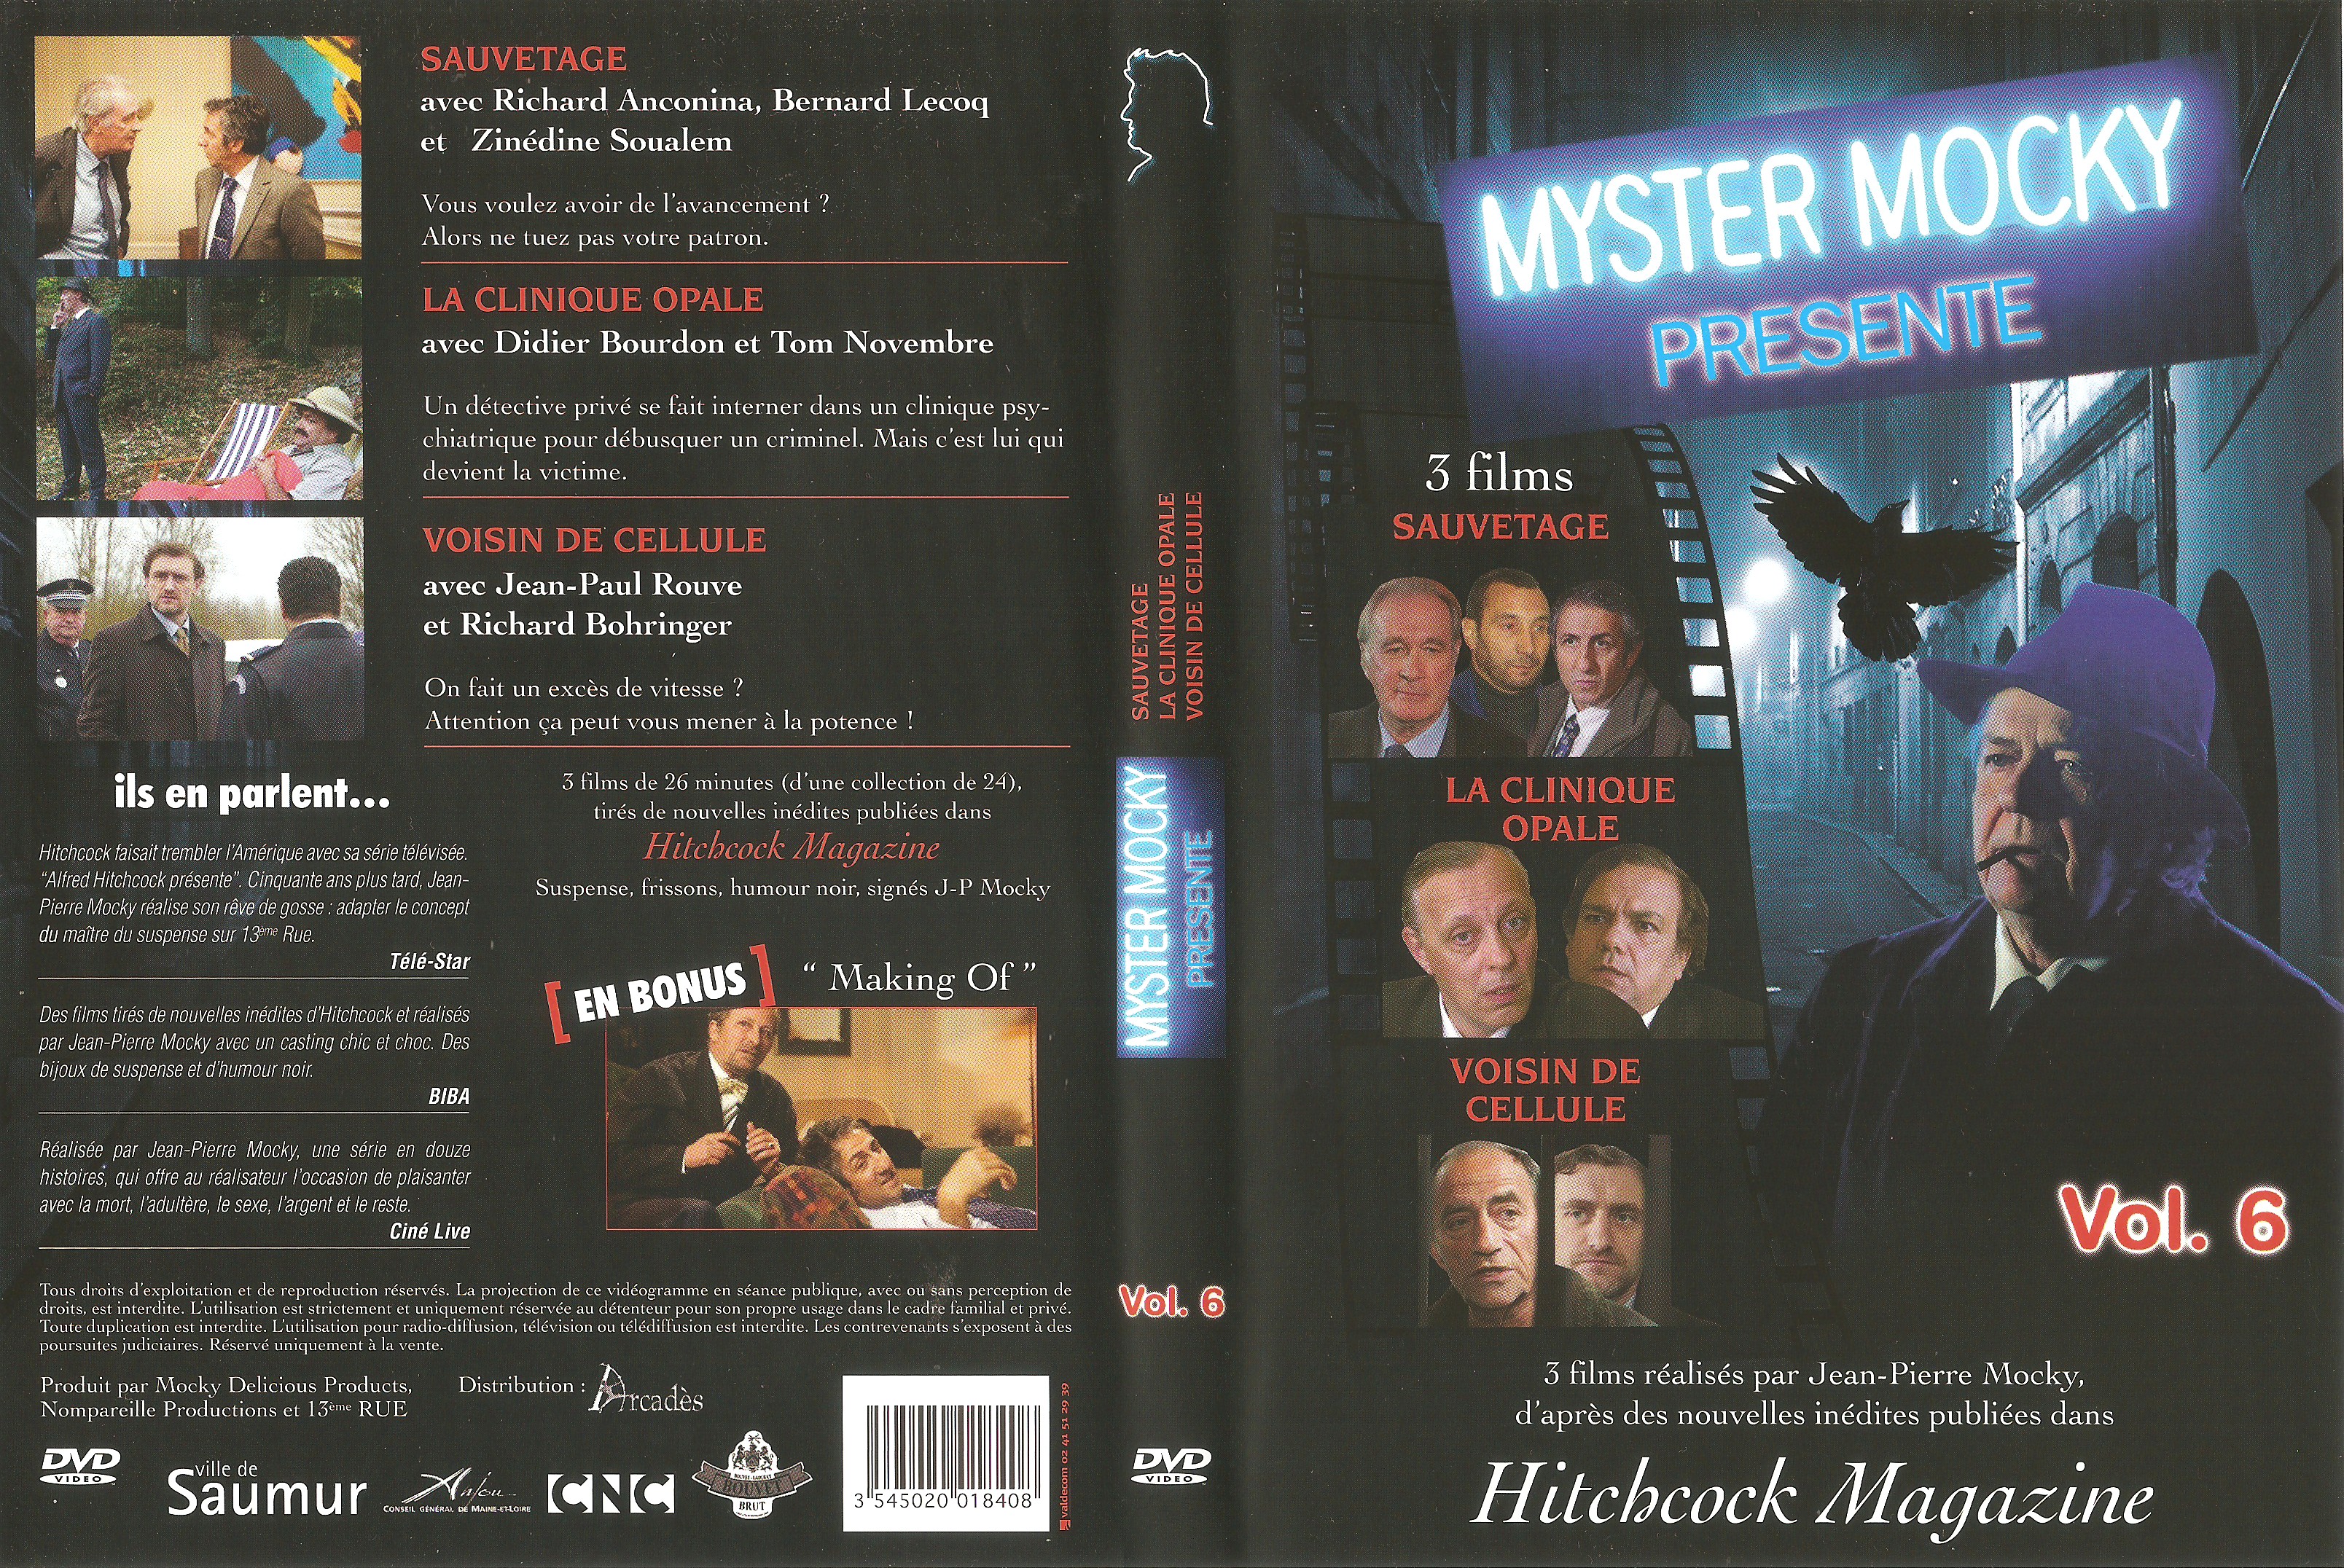 Jaquette DVD Myster Mocky prsente Vol 06